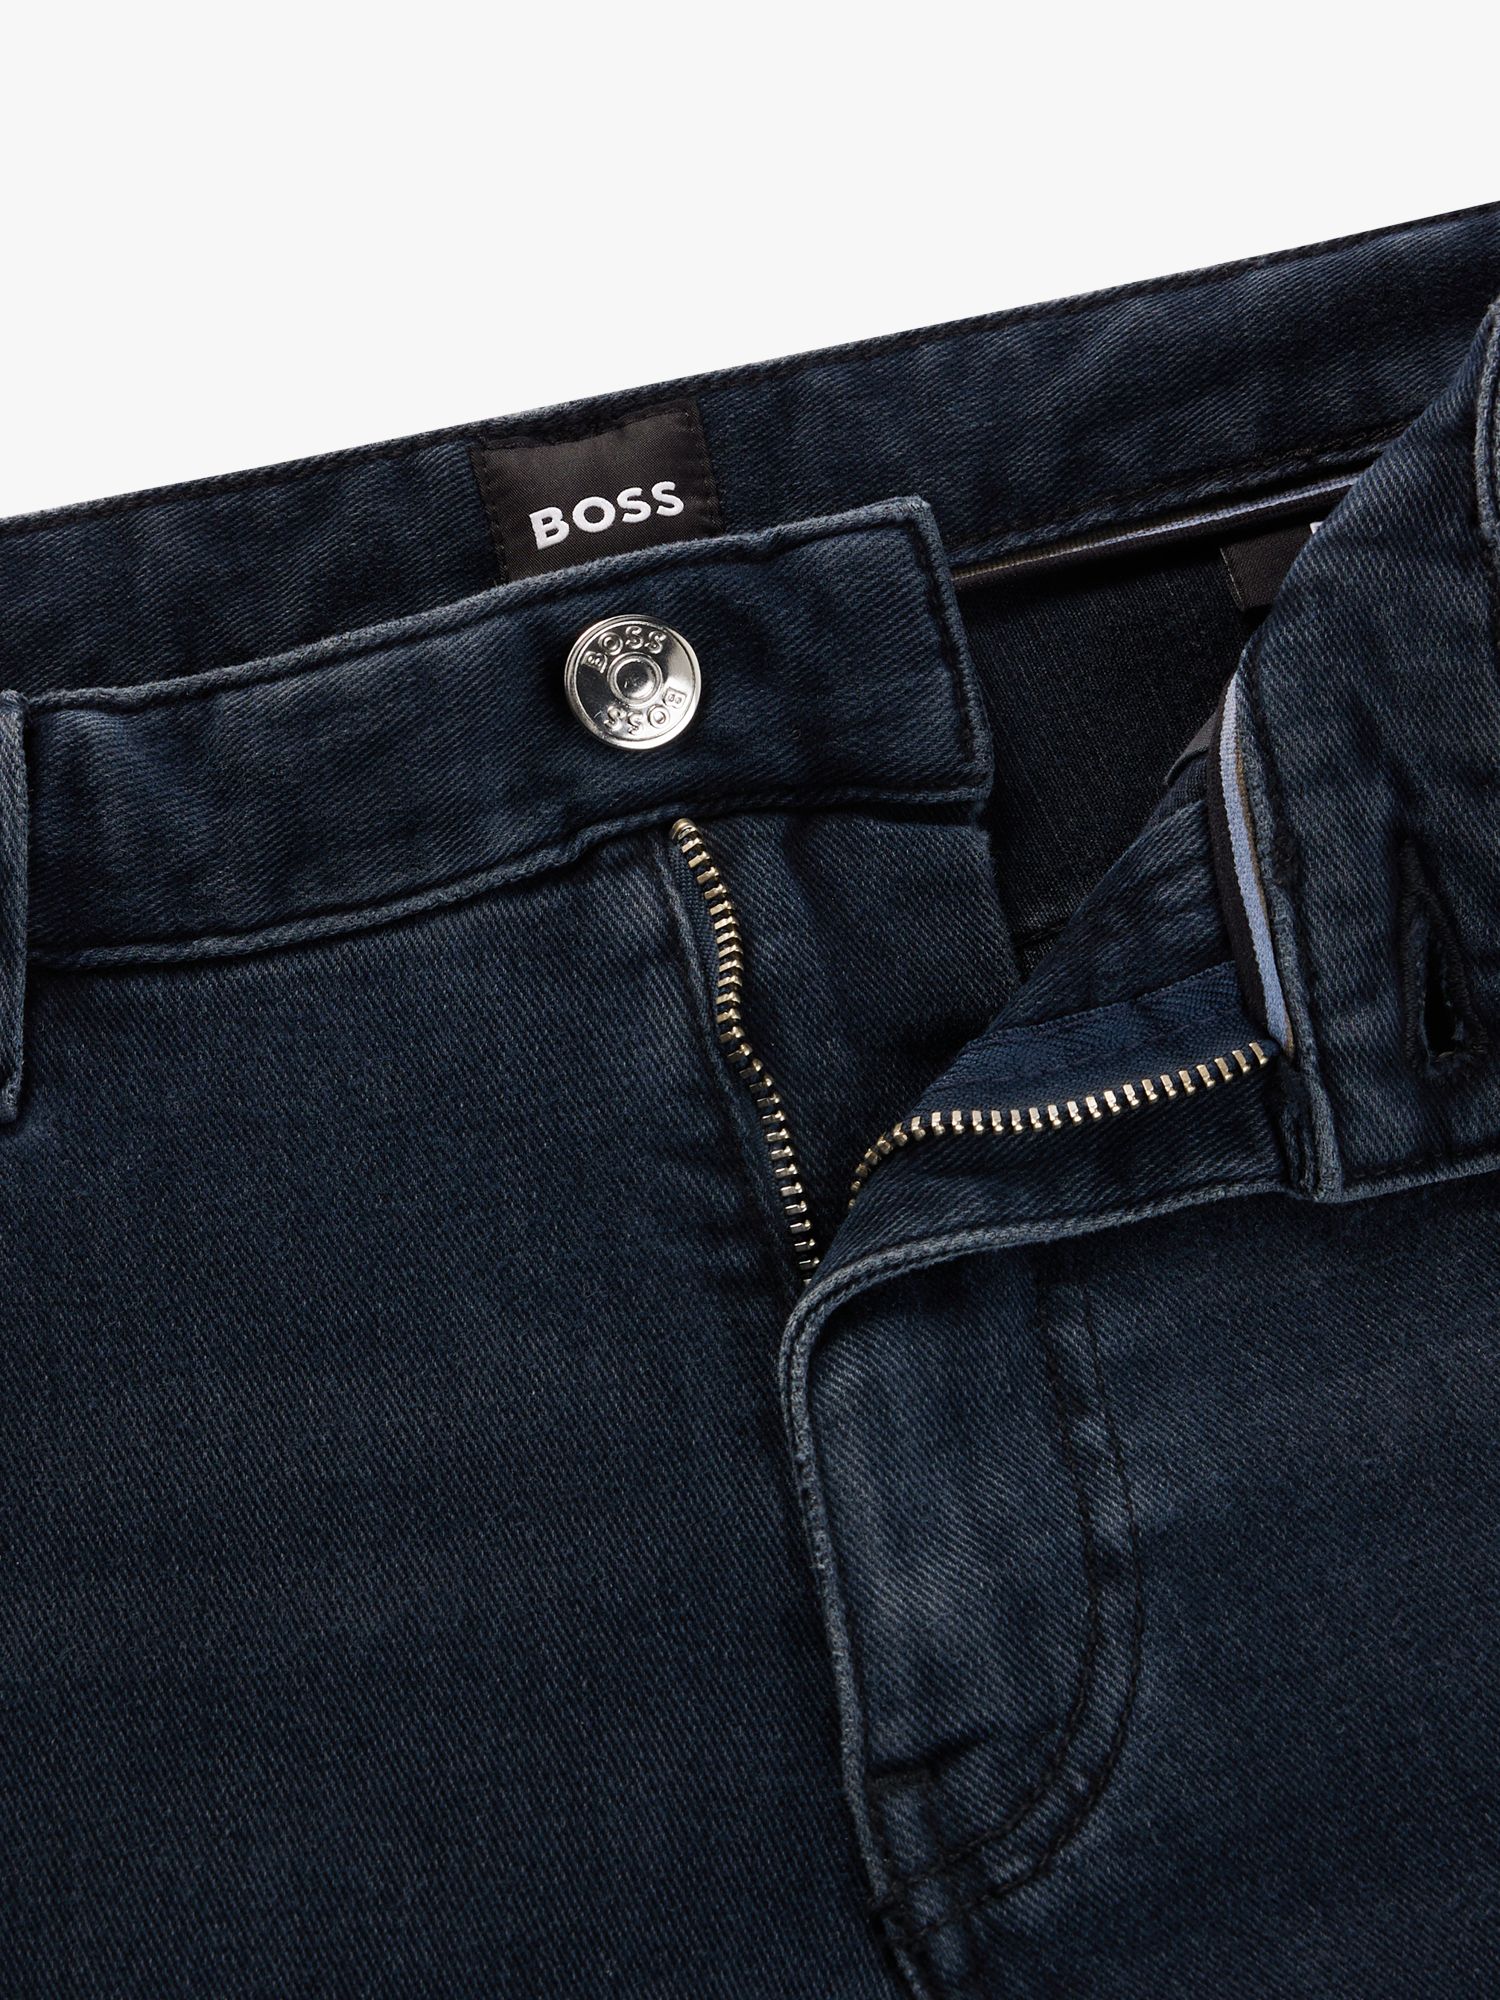 BOSS Maine Straight Fit Jeans, Dark Blue, 33R